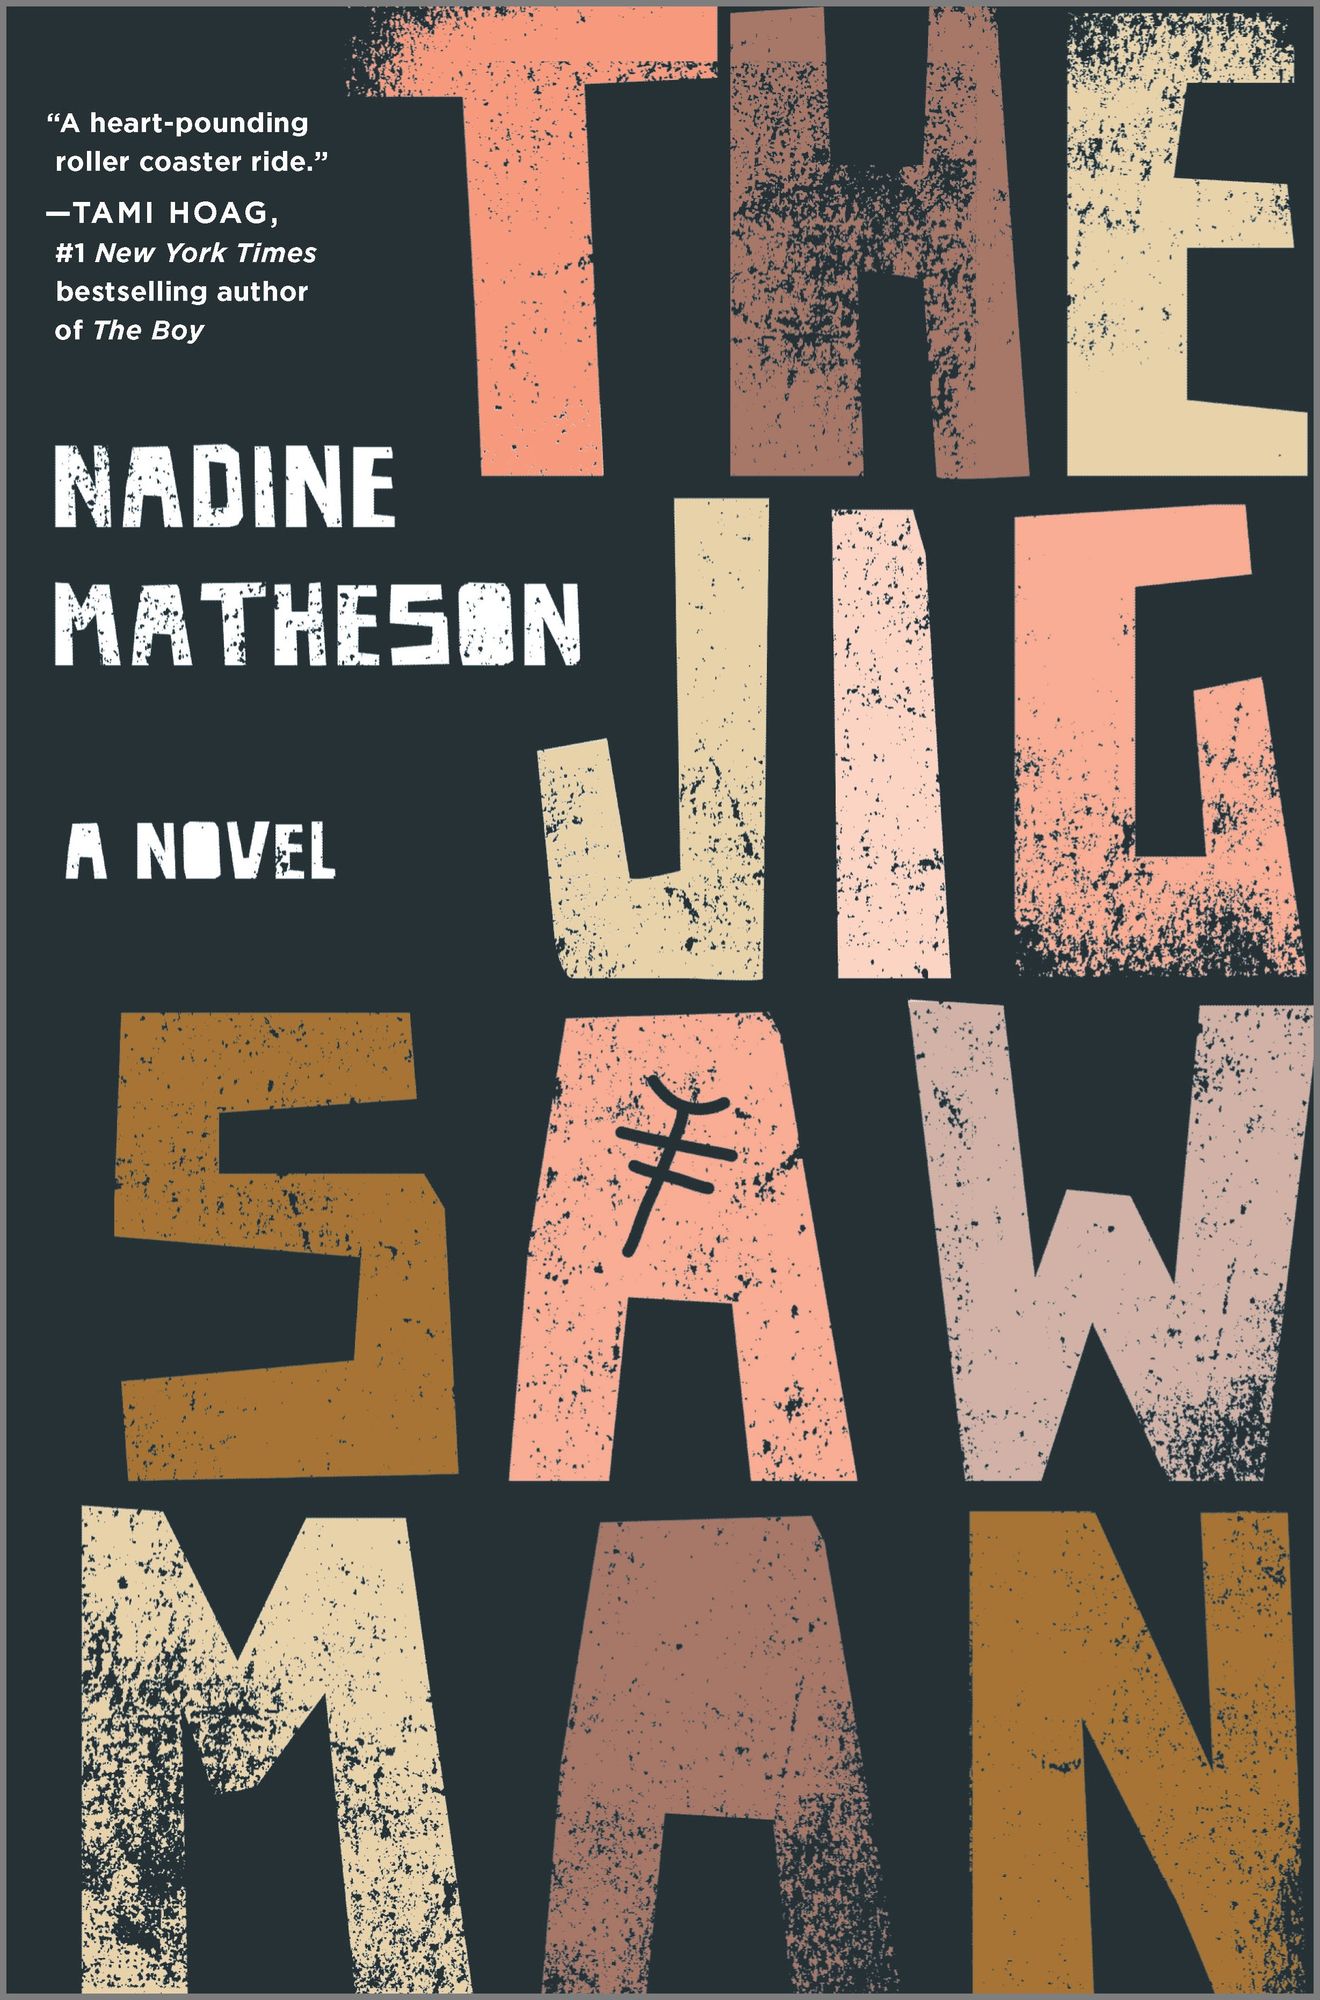 The Jigsaw Man by Nadine Matheson